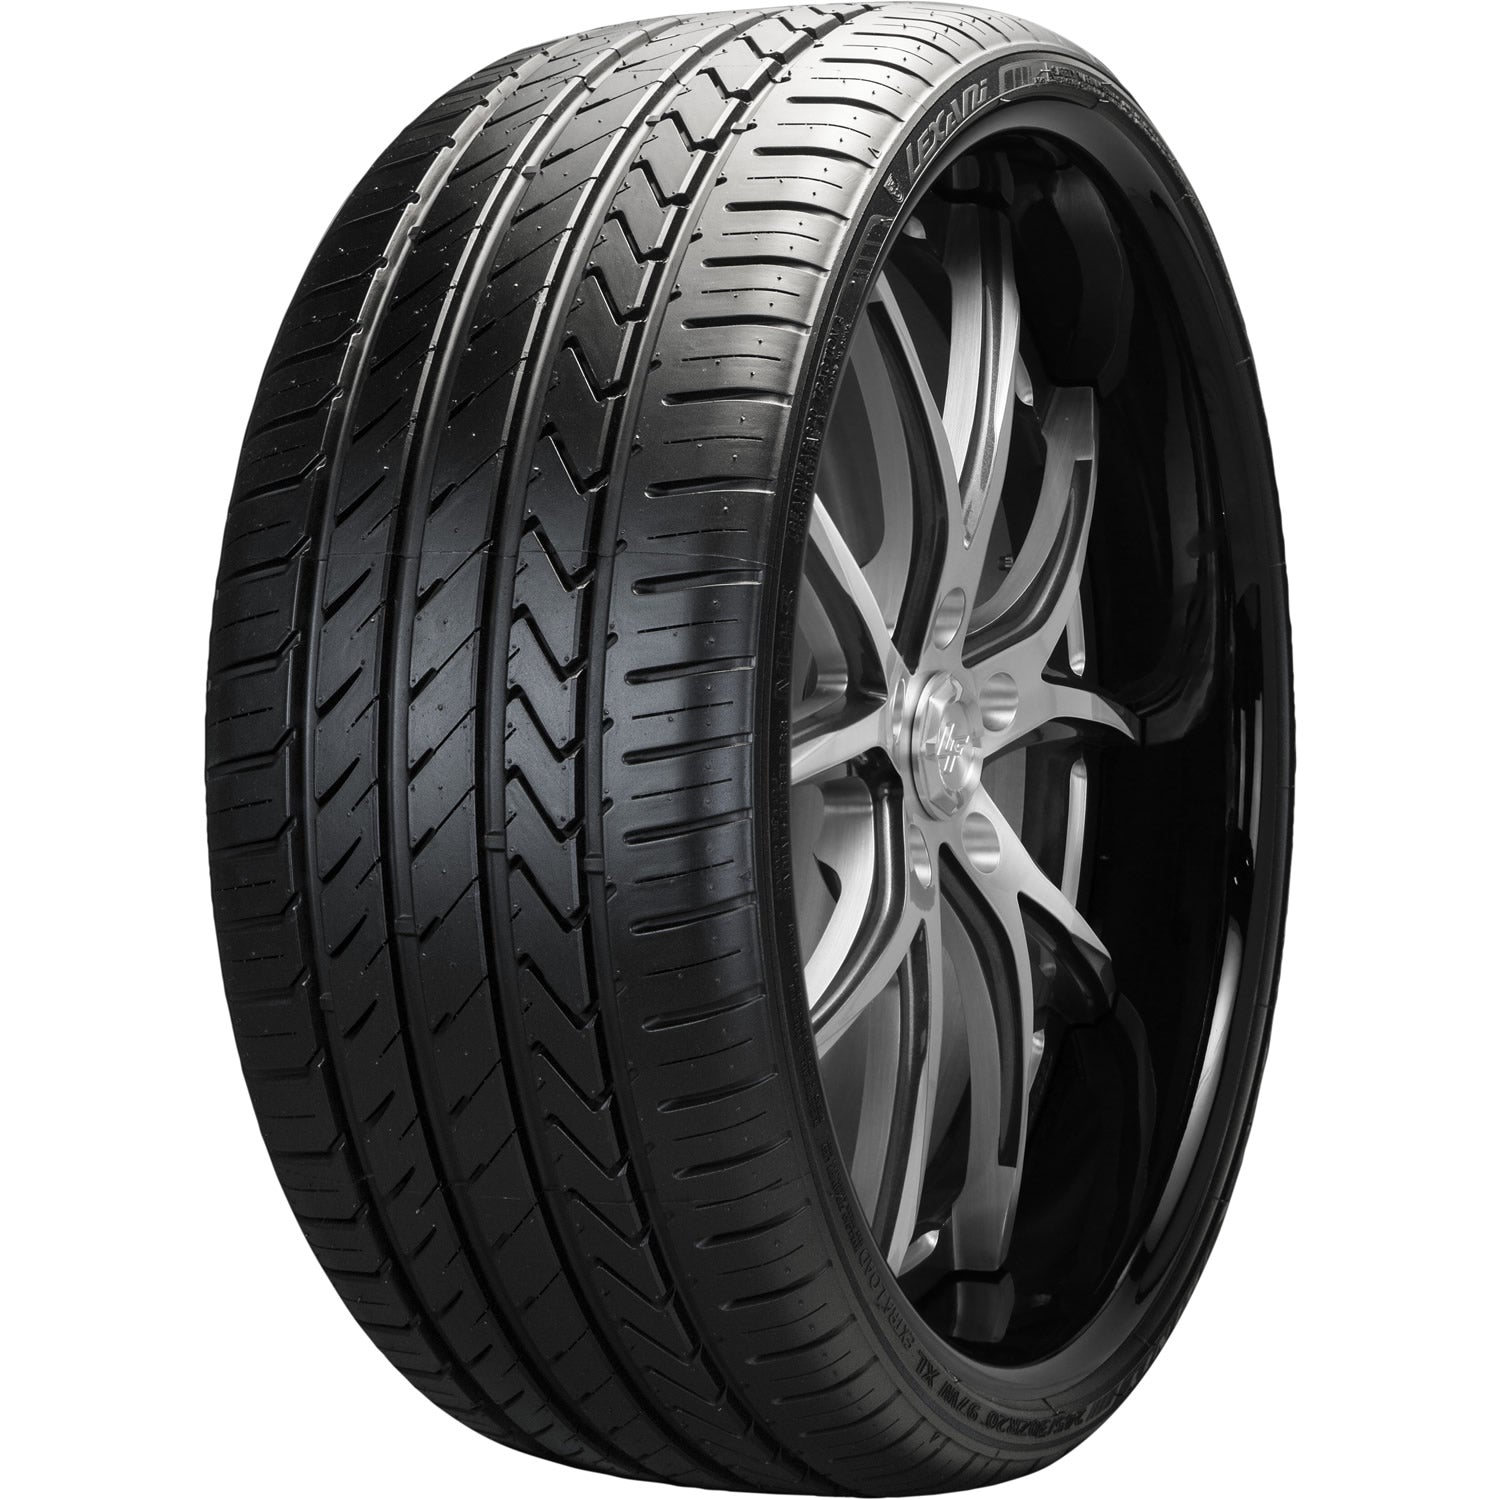 LEXANI LX-TWENTY 255/50ZR19 (29.1X10.4R 19) Tires